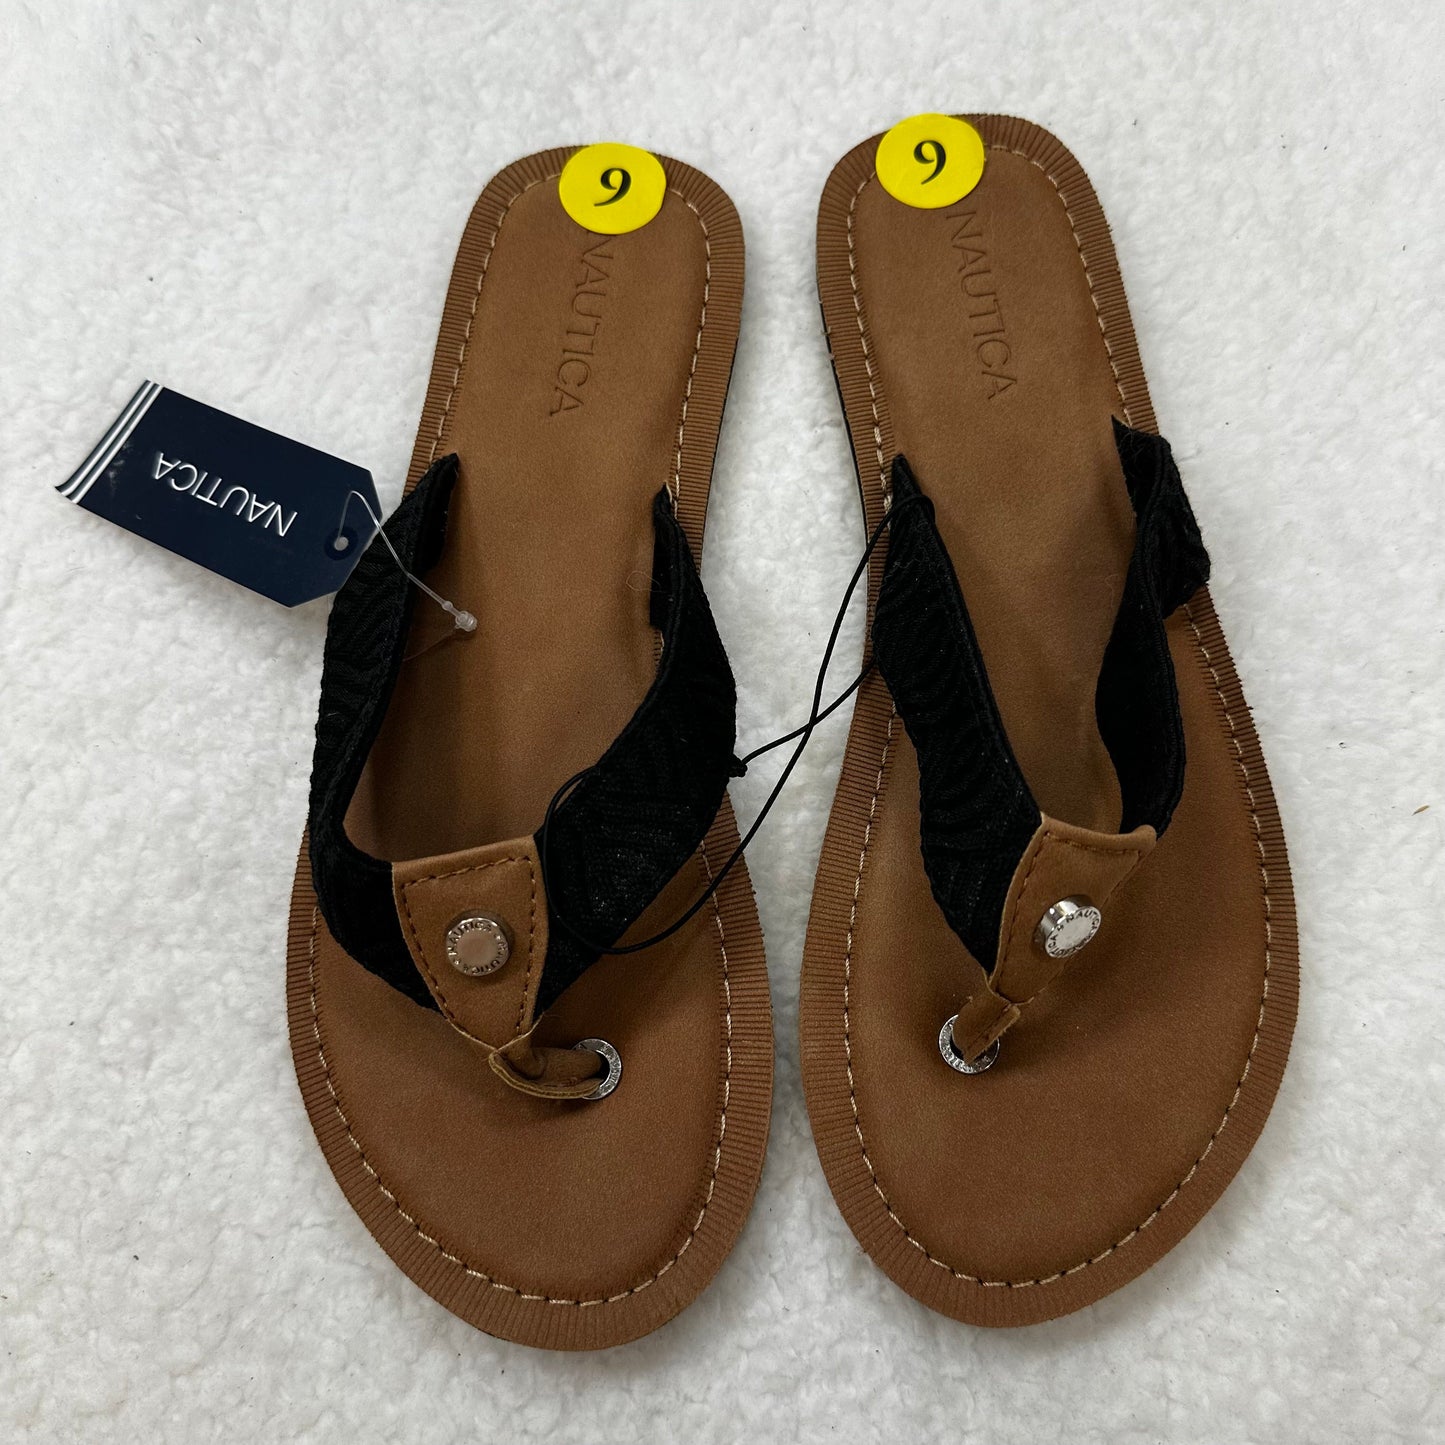 Black Sandals Flip Flops Nautica, Size 9